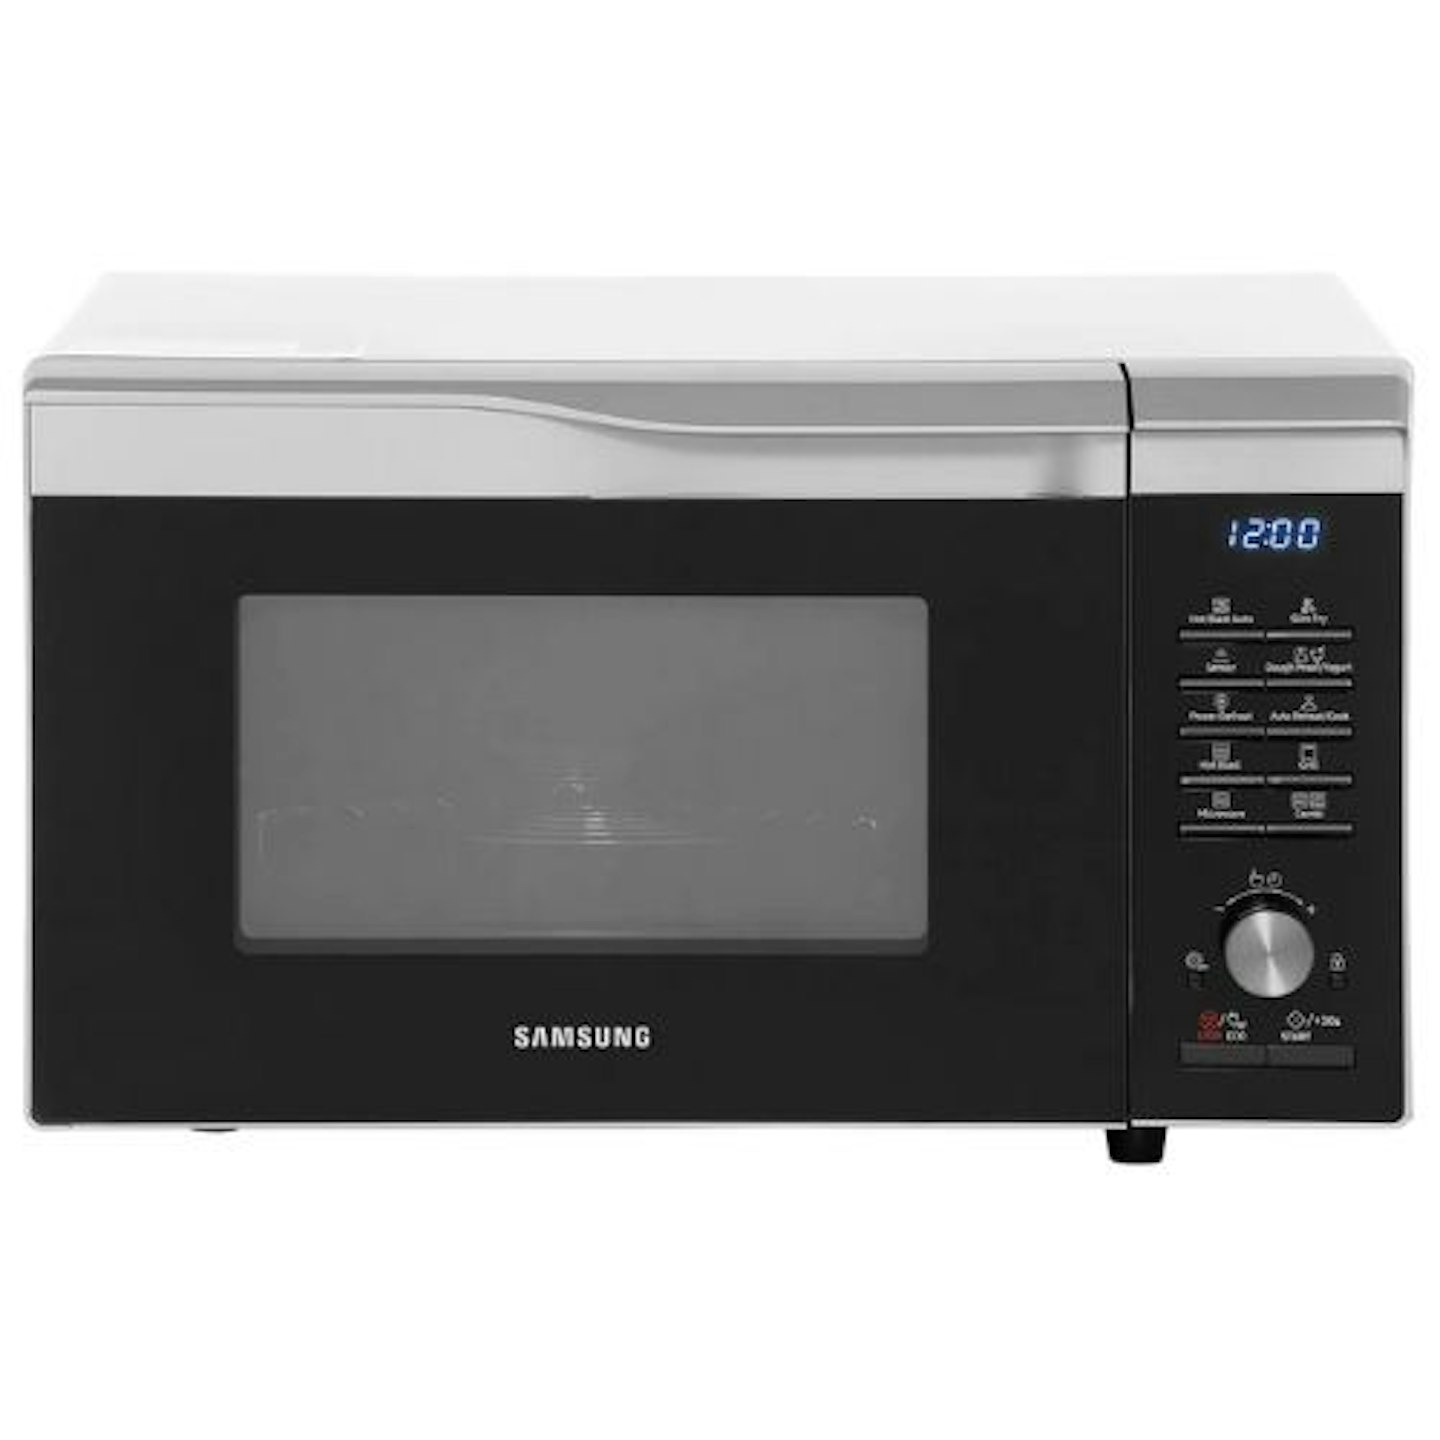  Samsung Easy View™ MC28M6075CS 28 Litre Combination Microwave Oven